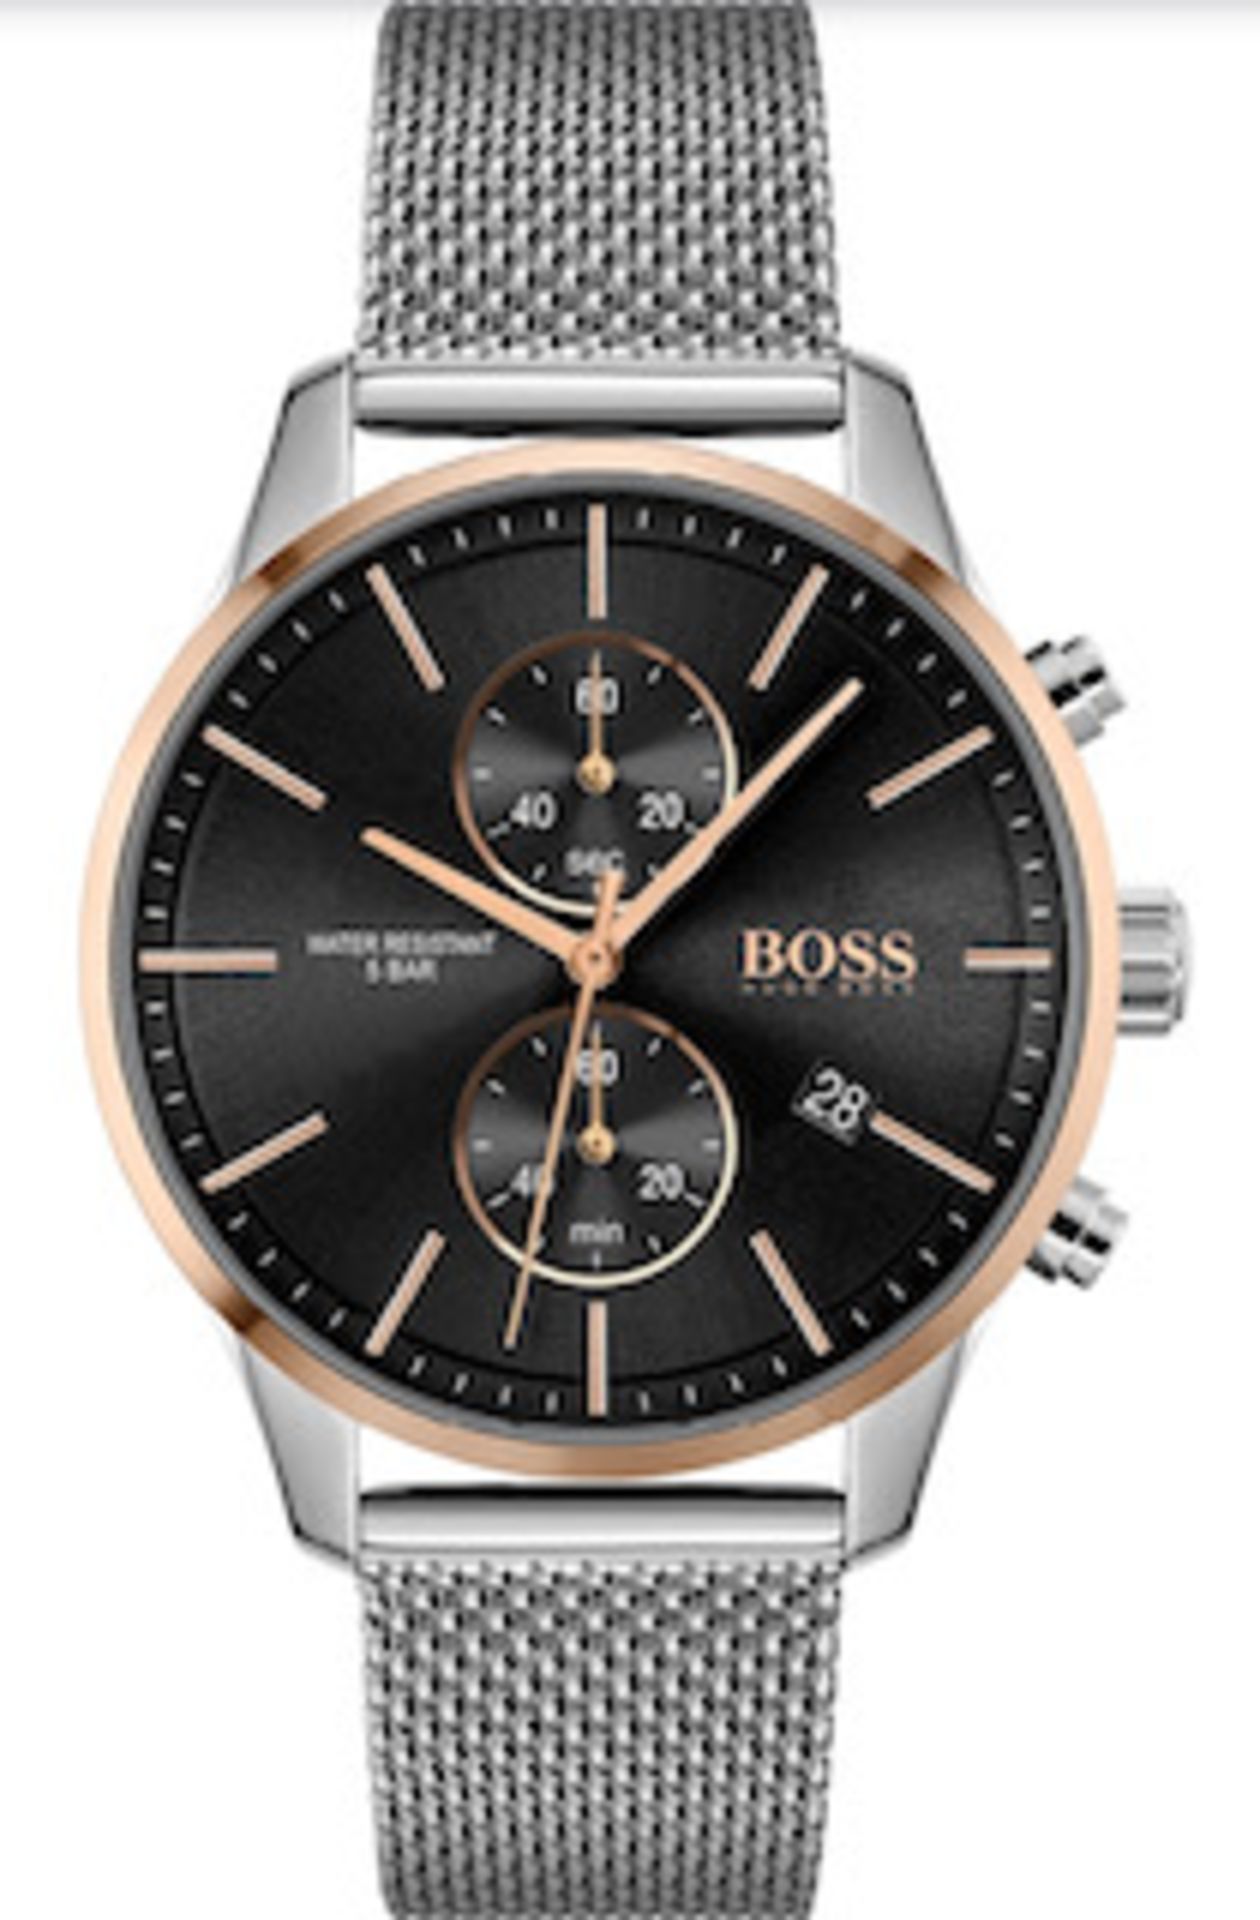 Hugo Boss 1513805 Men's Associate Stainless Steel Mesh Band Chronograph Watch